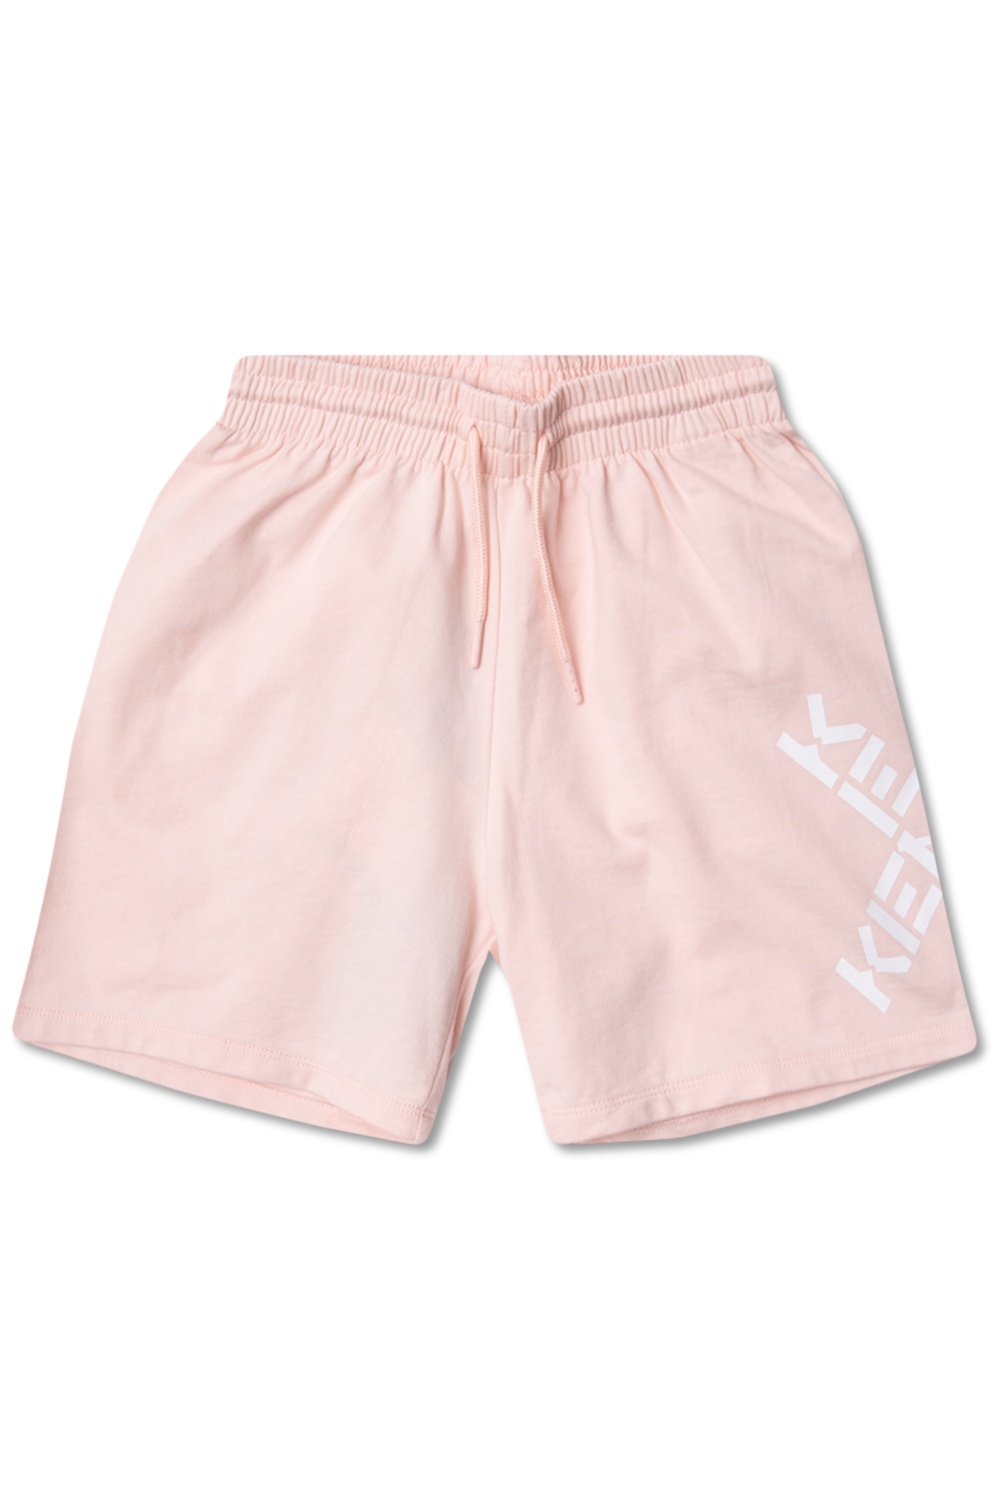 Kenzo Kids Sweat shorts with logo